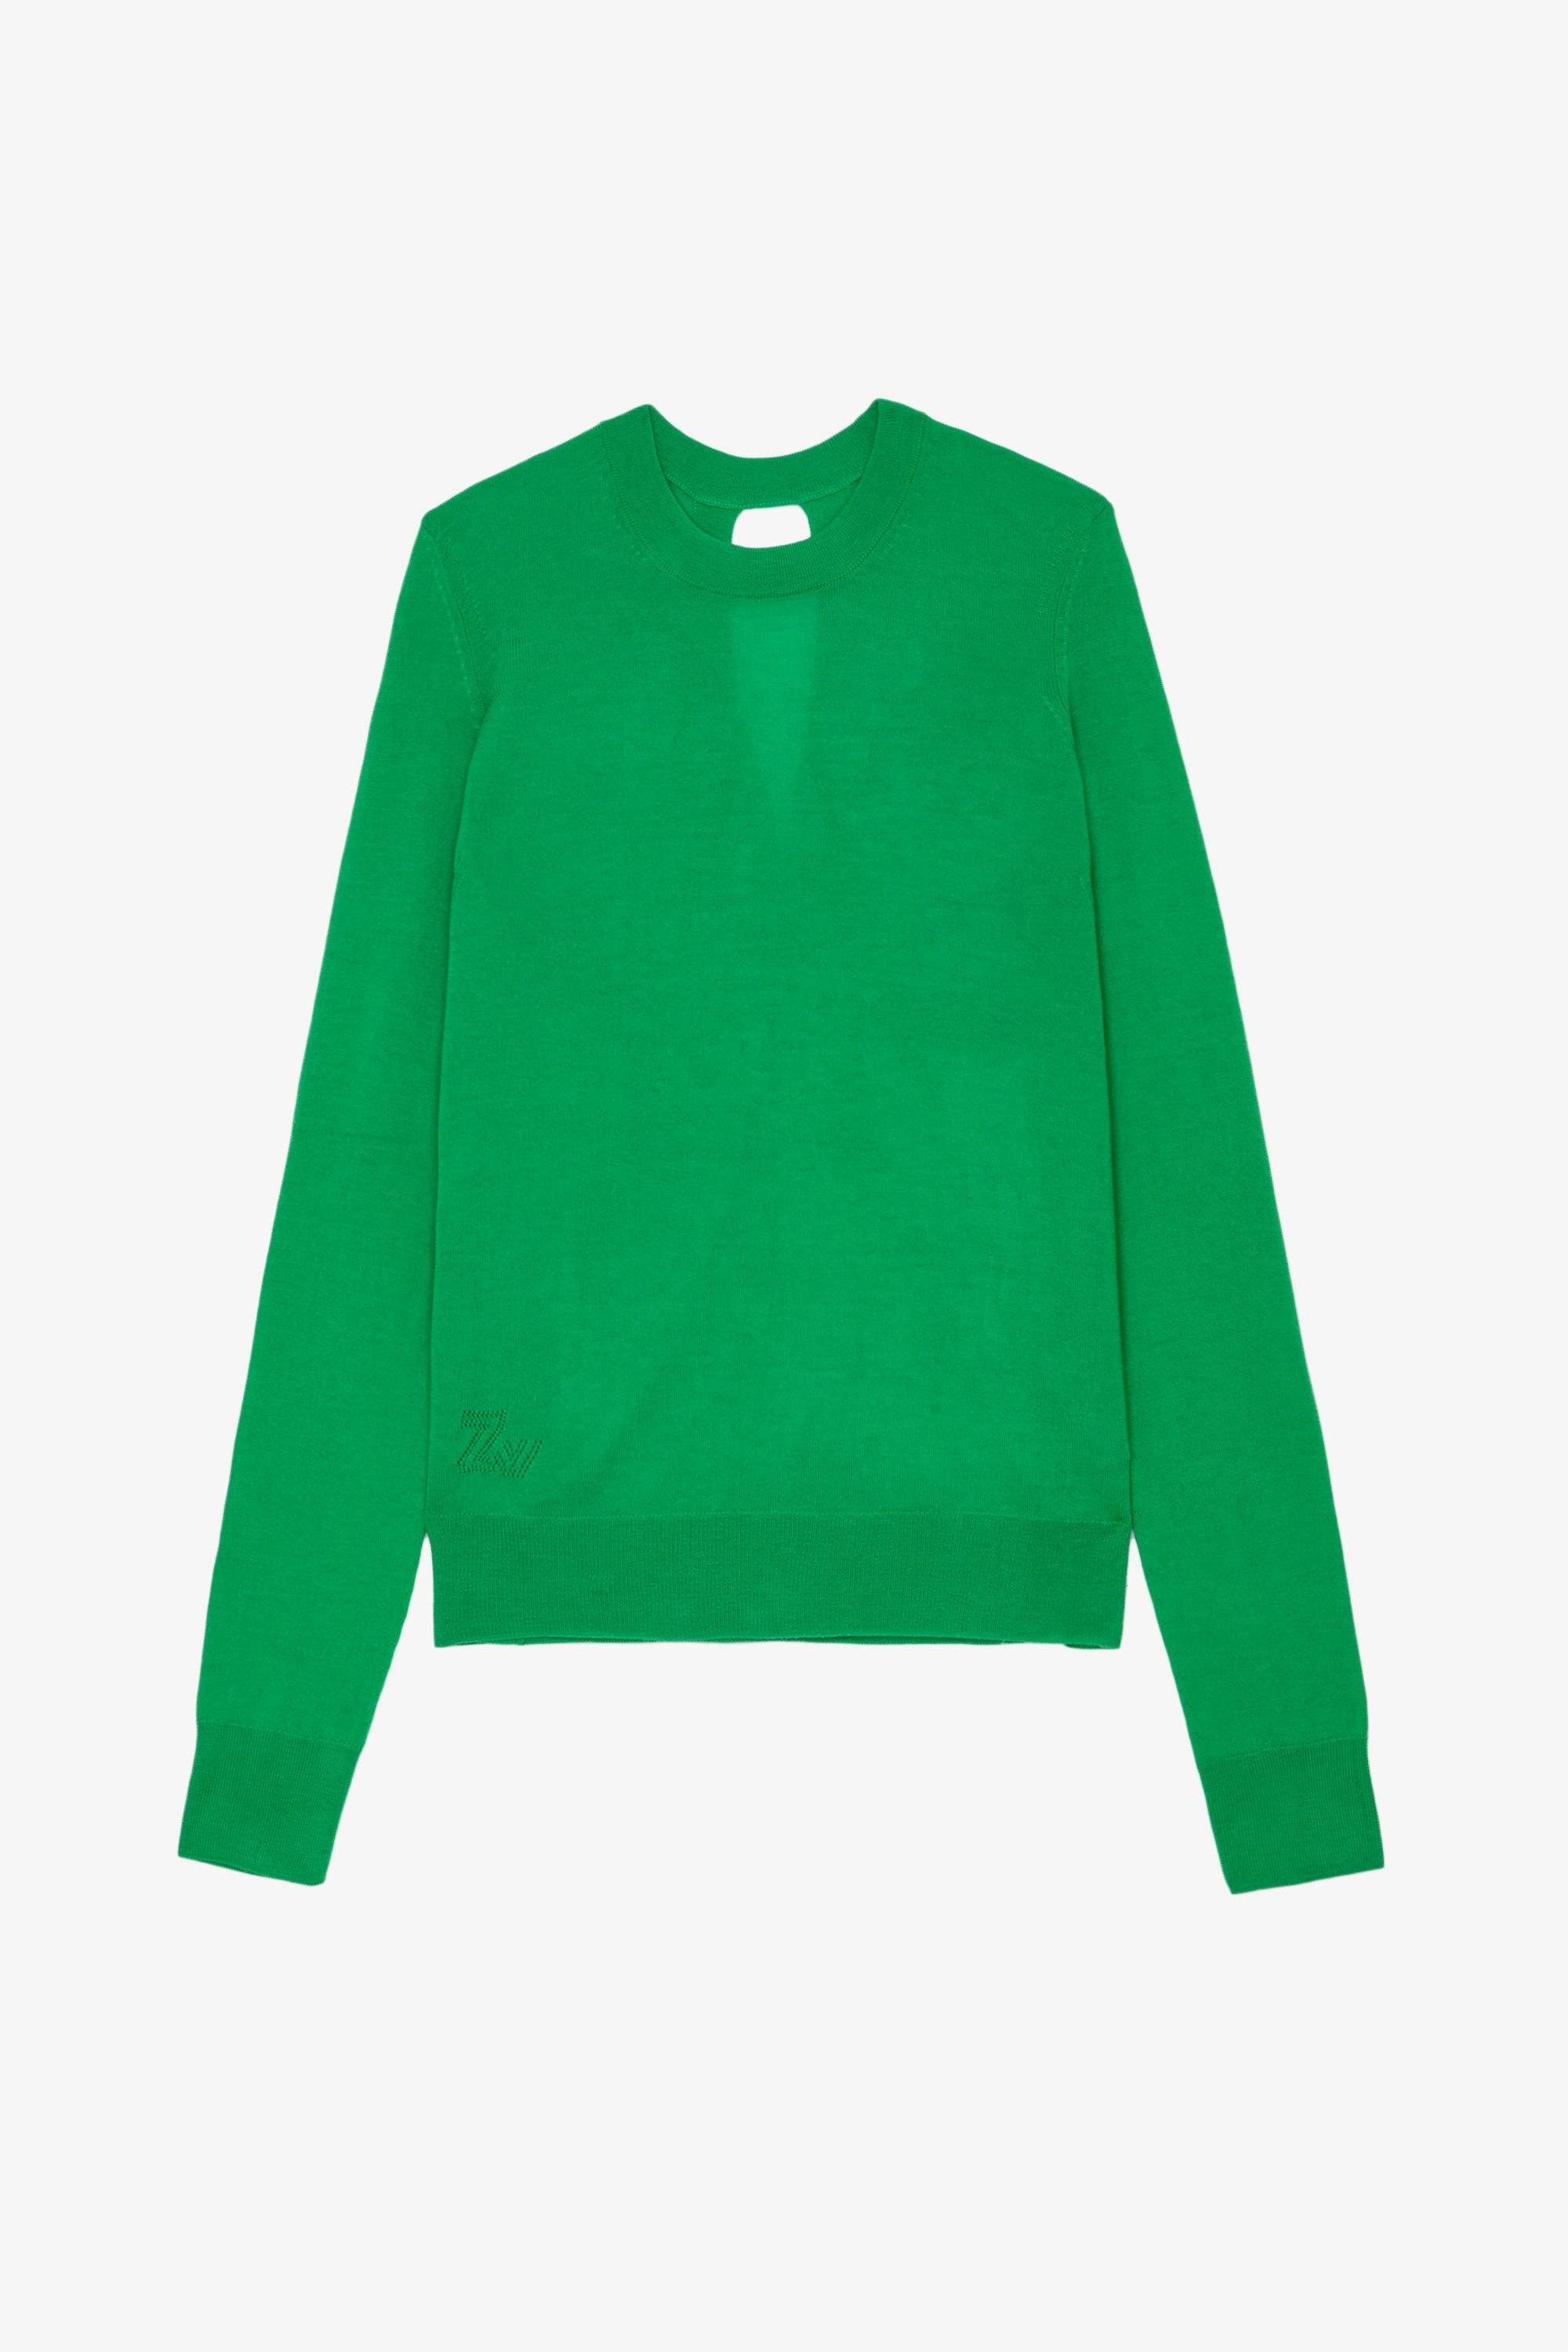 Emma ニット Women’s green long-sleeved merino knit jumper with round neck and back slit